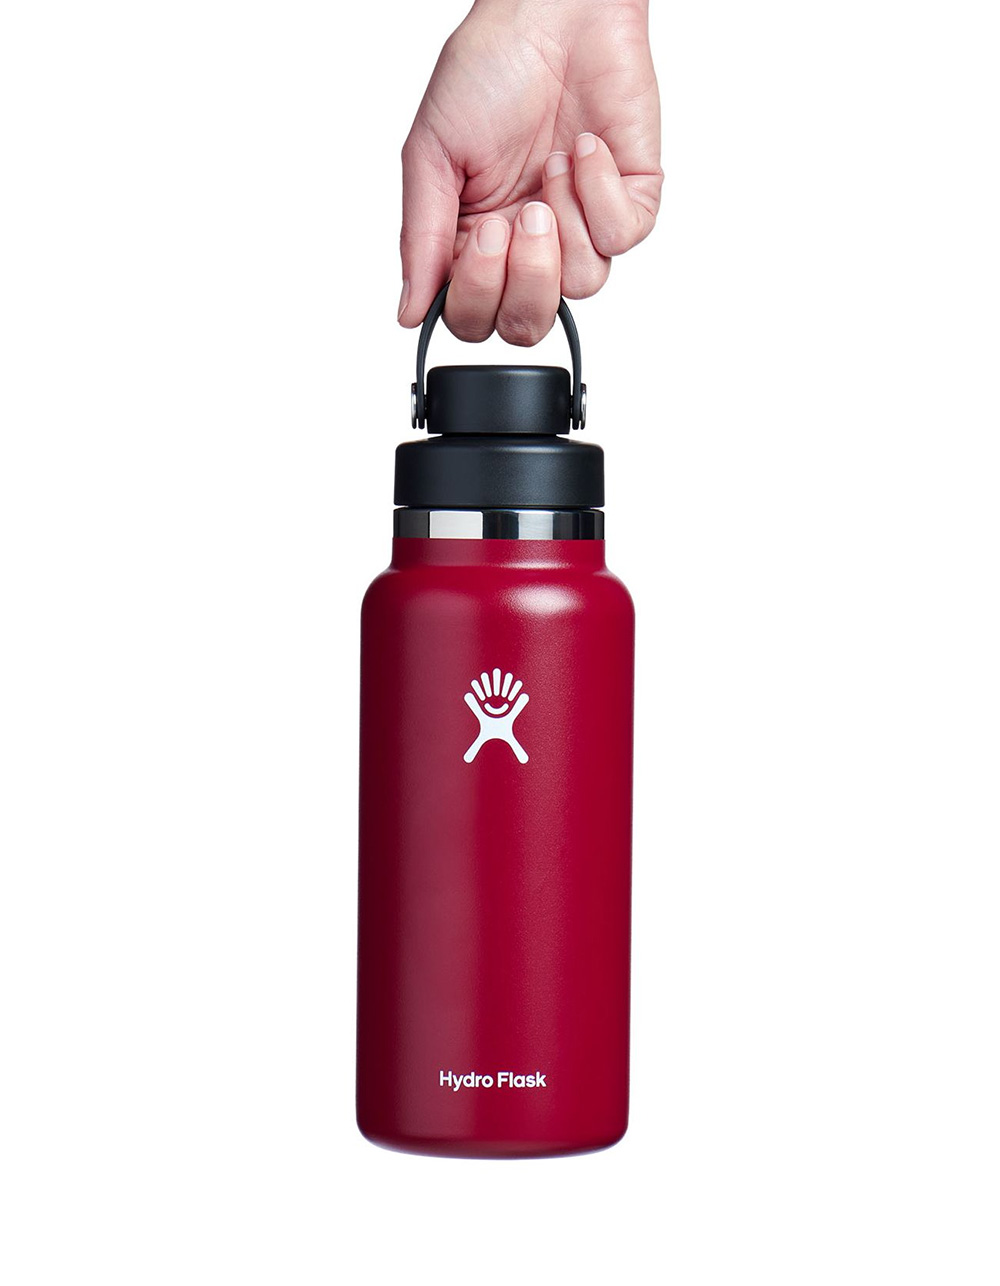 Reebok Stainless Steel 32 oz Insulated Water Bottle - BPA Free